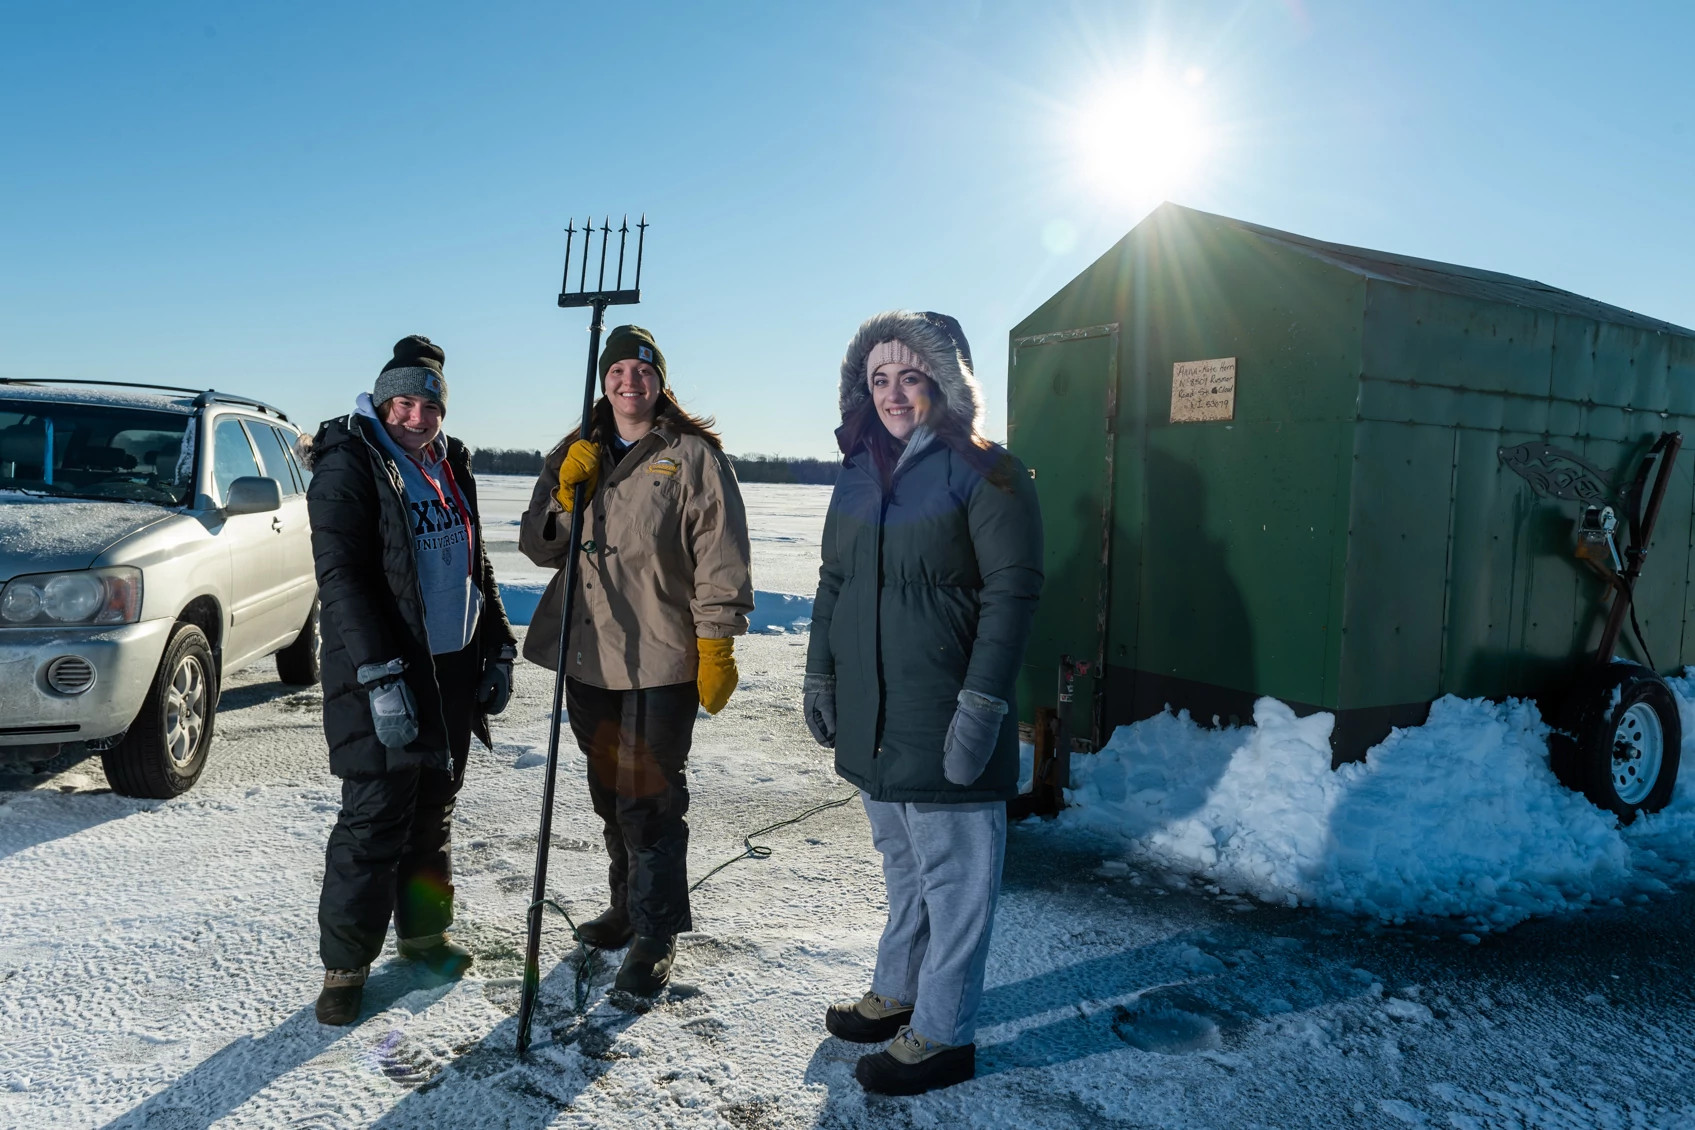 three women getting ready to spear sturgeon on a frozen lake